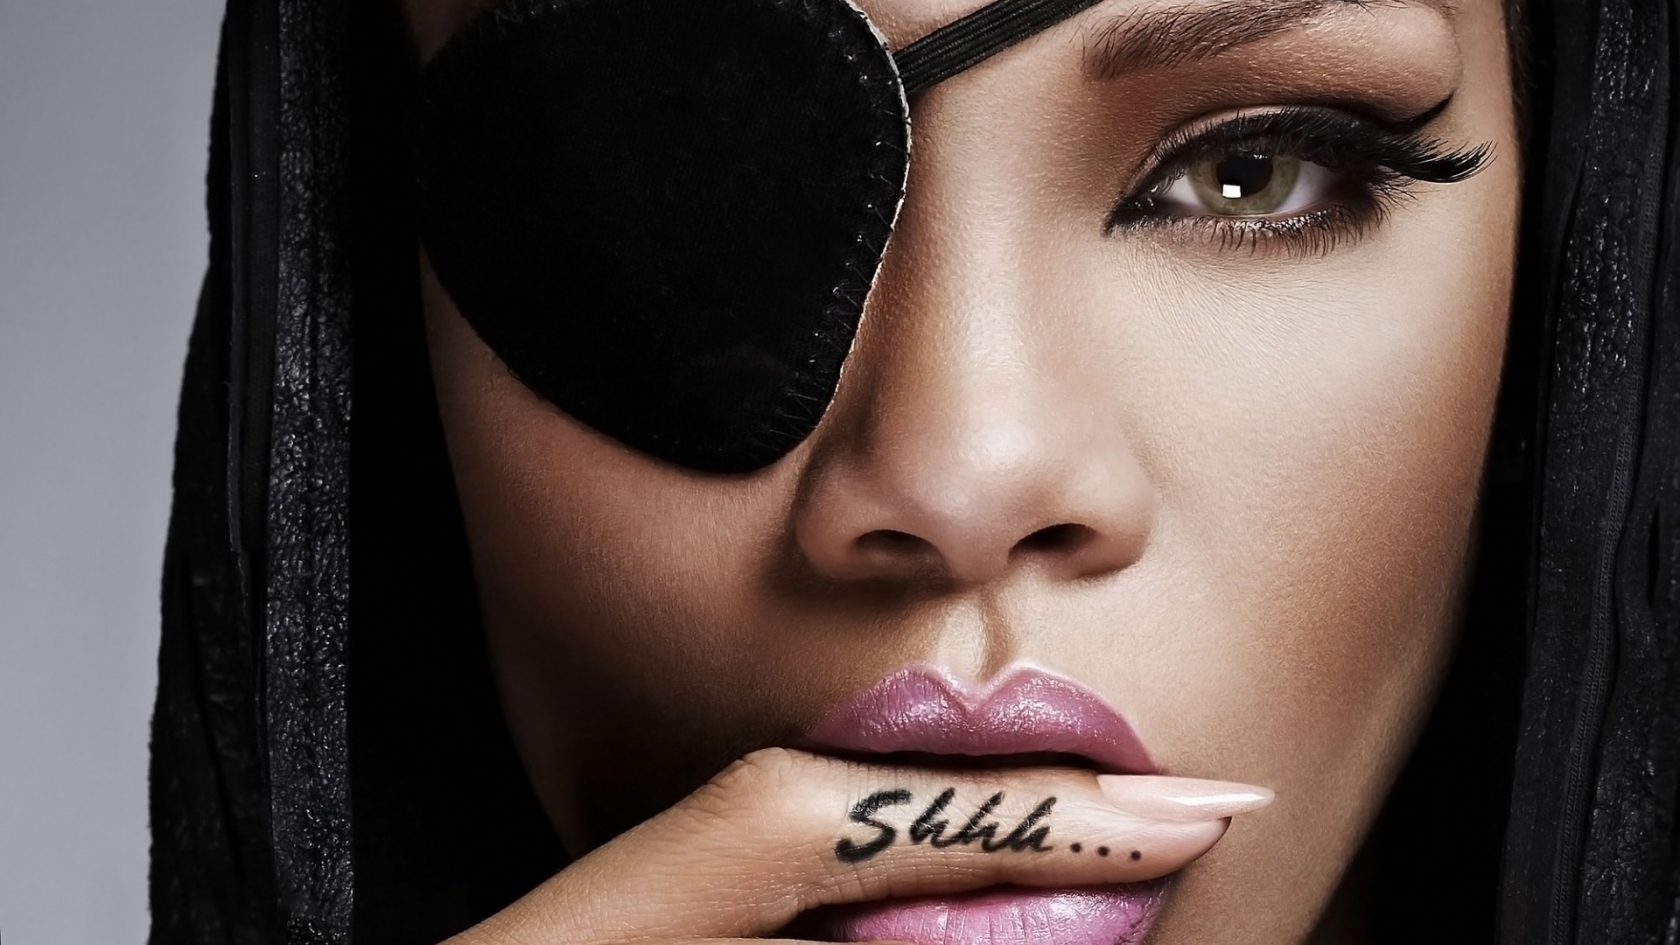 Rihanna Shhh Tattoo for 1680 x 945 HDTV resolution